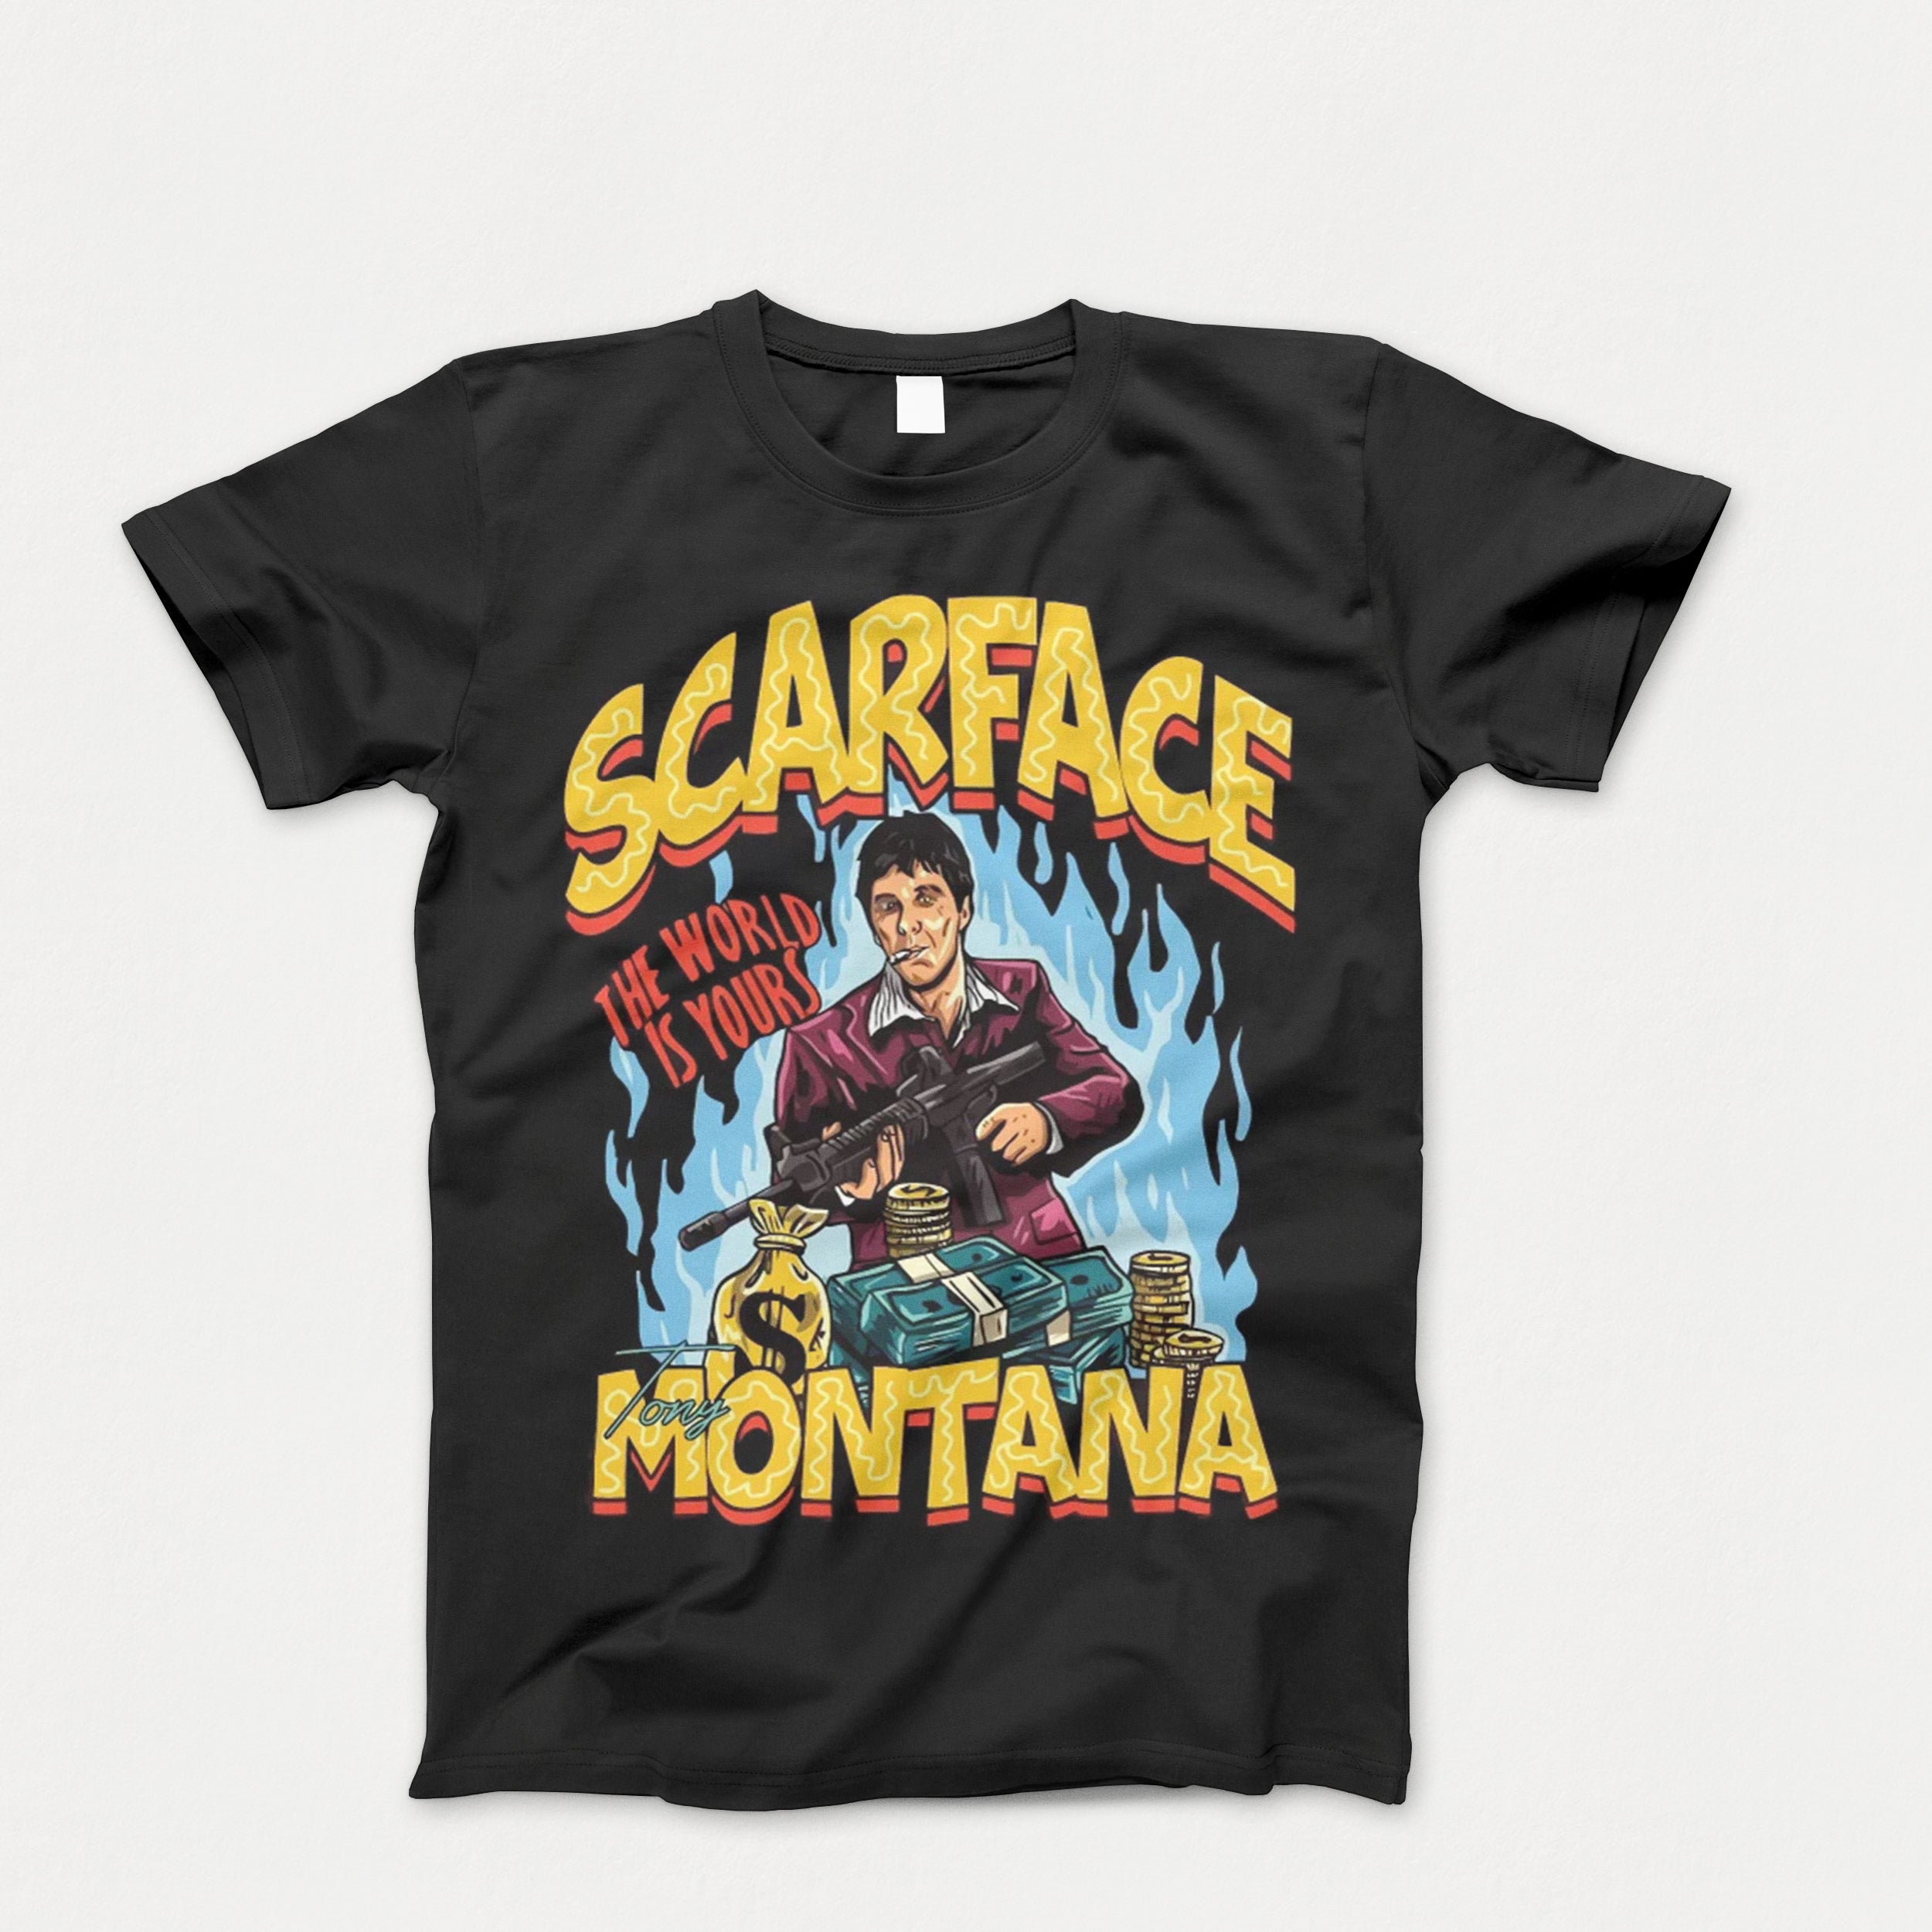 Unisex Adult Scarface Montana Tee Shirt